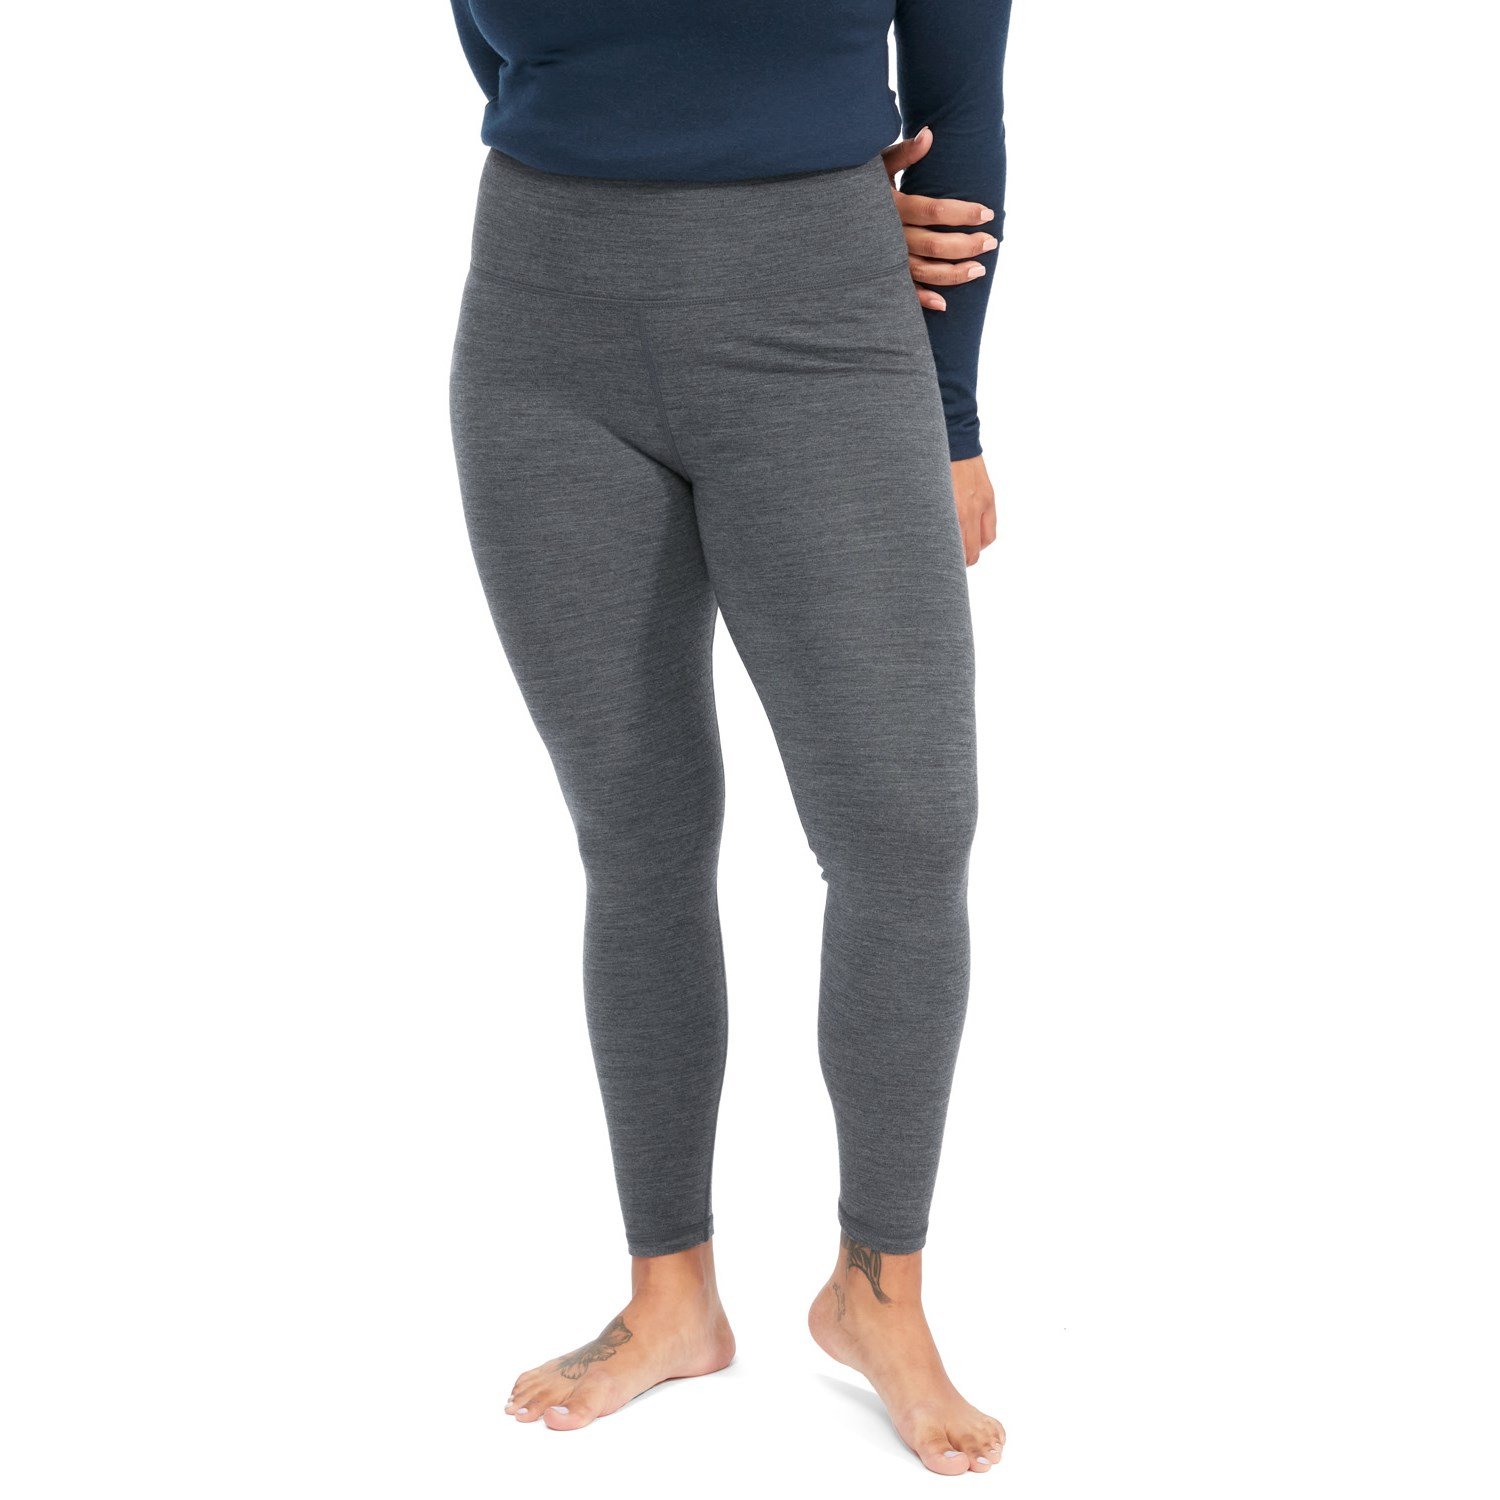 Women's Merino Wool Yoga Pants